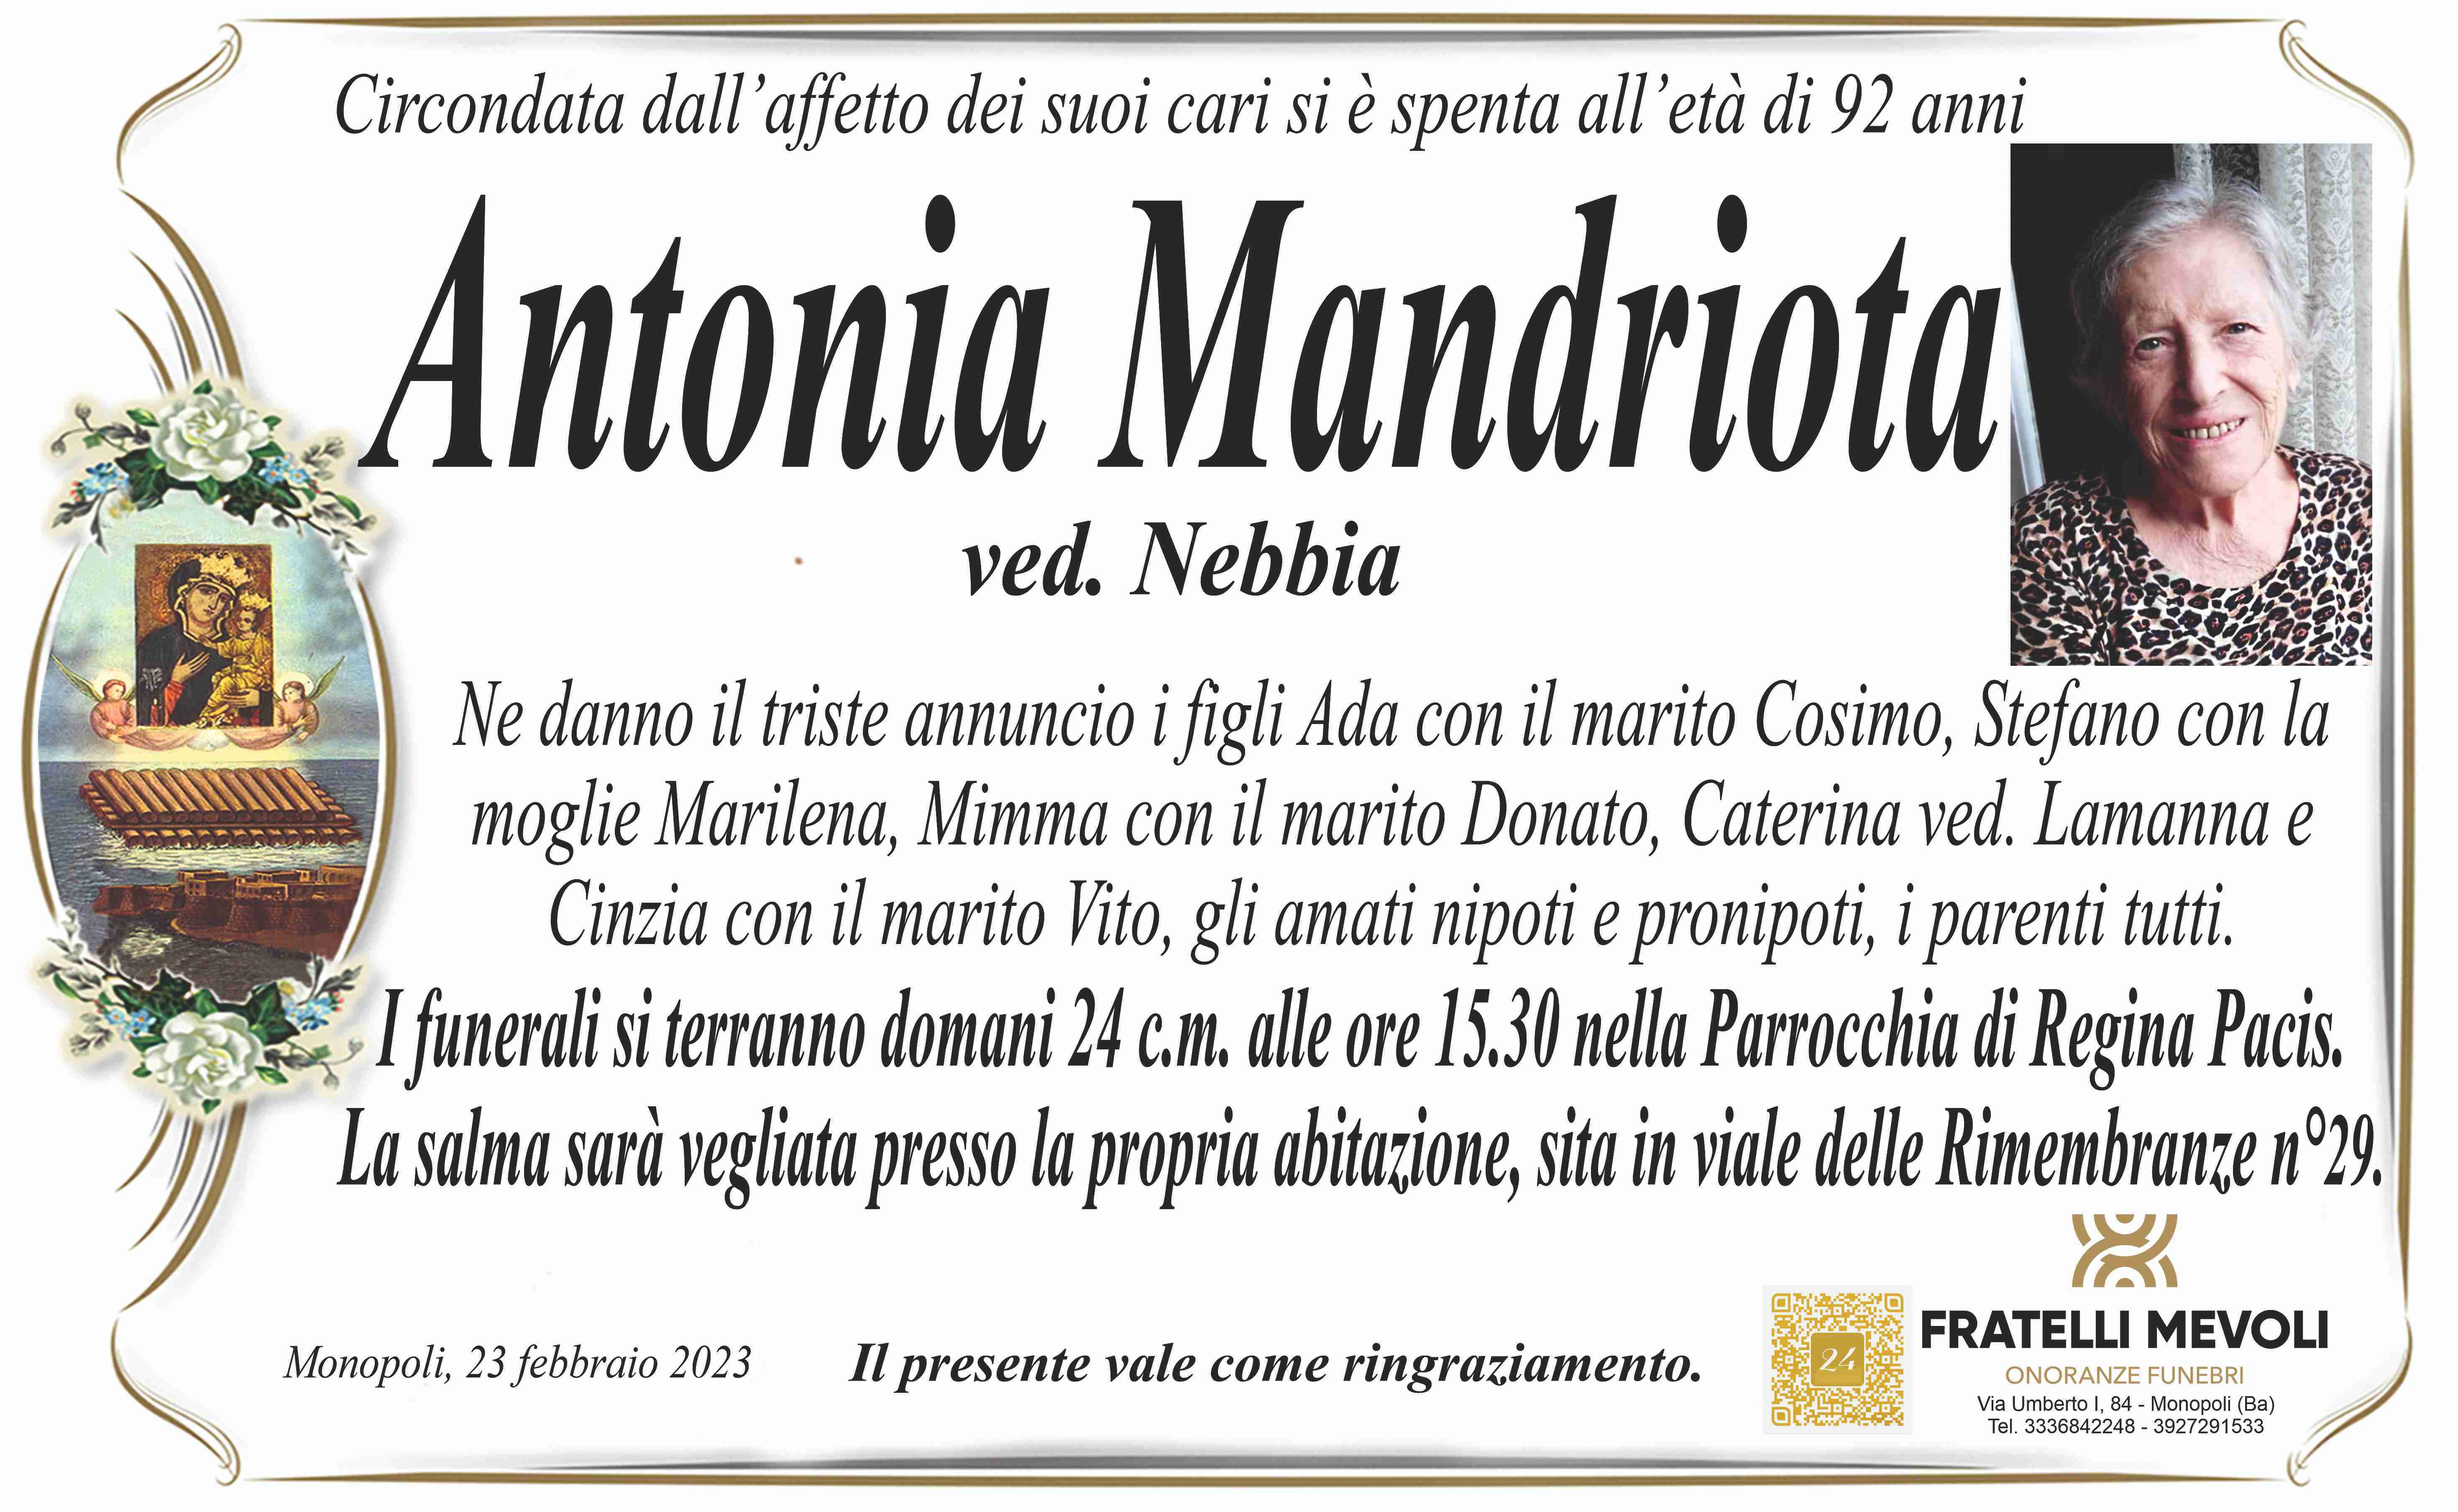 Antonia Mandriota